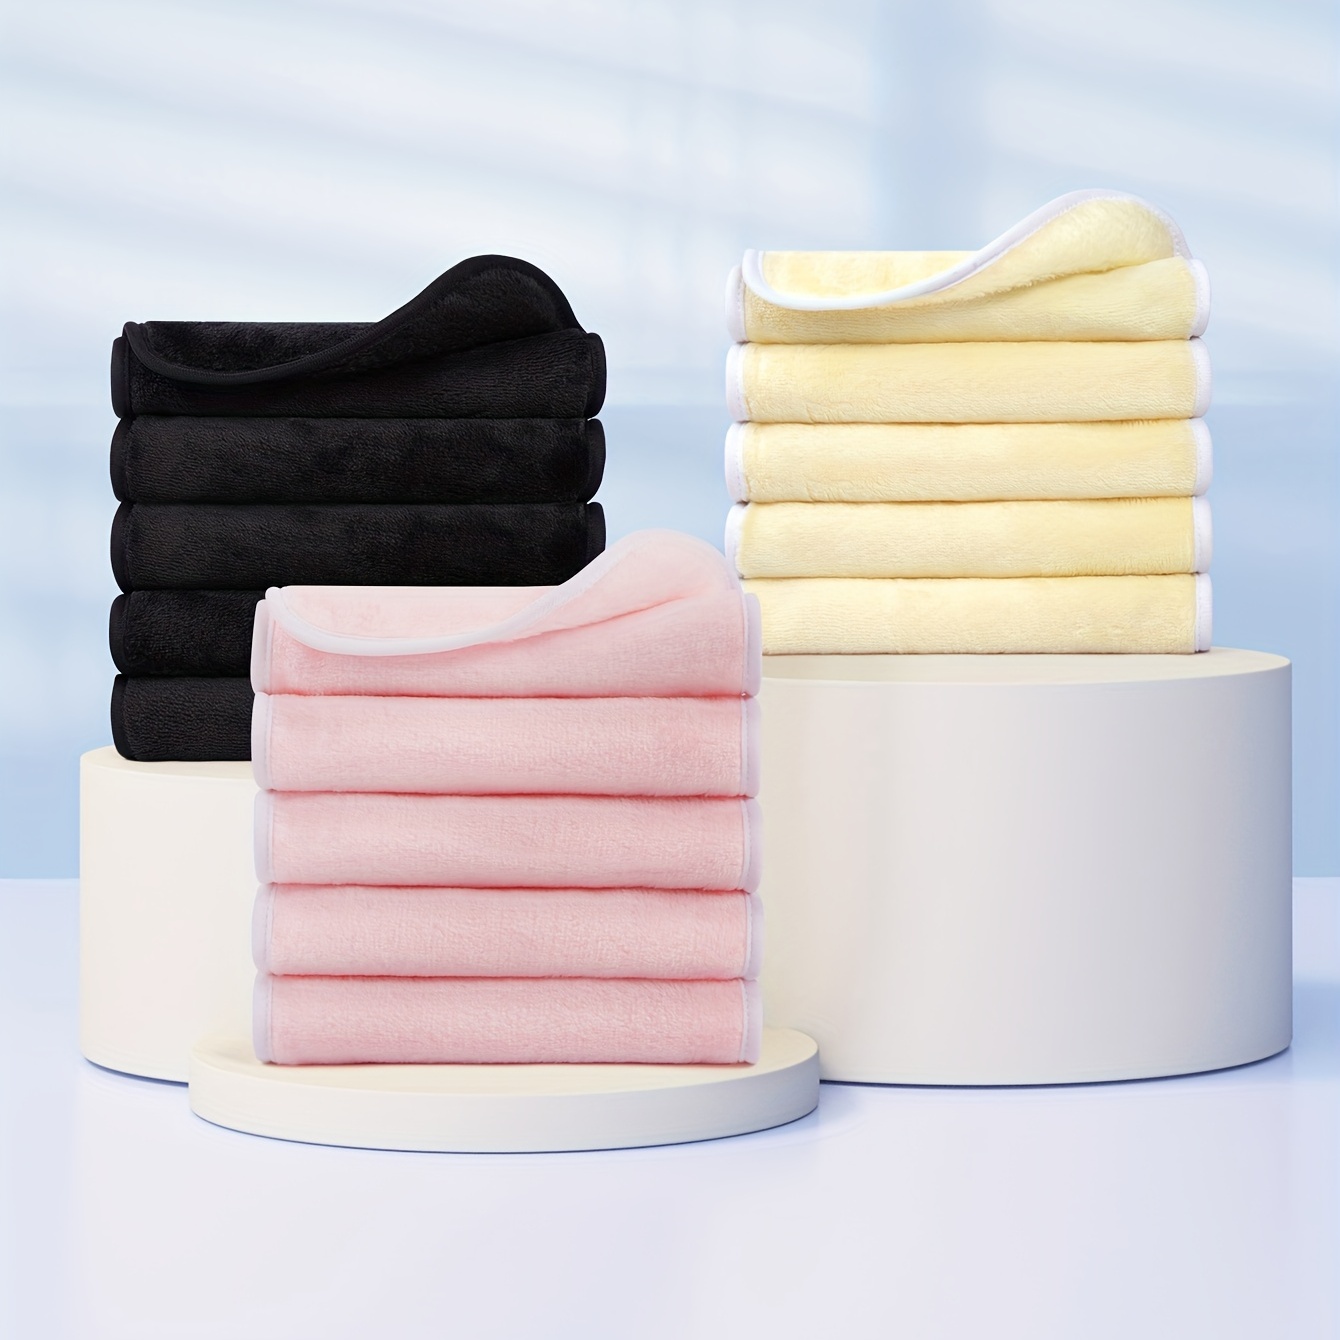 1PCS Cotton Face Towels Hotel Microfiber White Towels 30x30cm Hand Towel  Bathroom Christmas Napkin Kitchen Towel Free shipping - AliExpress